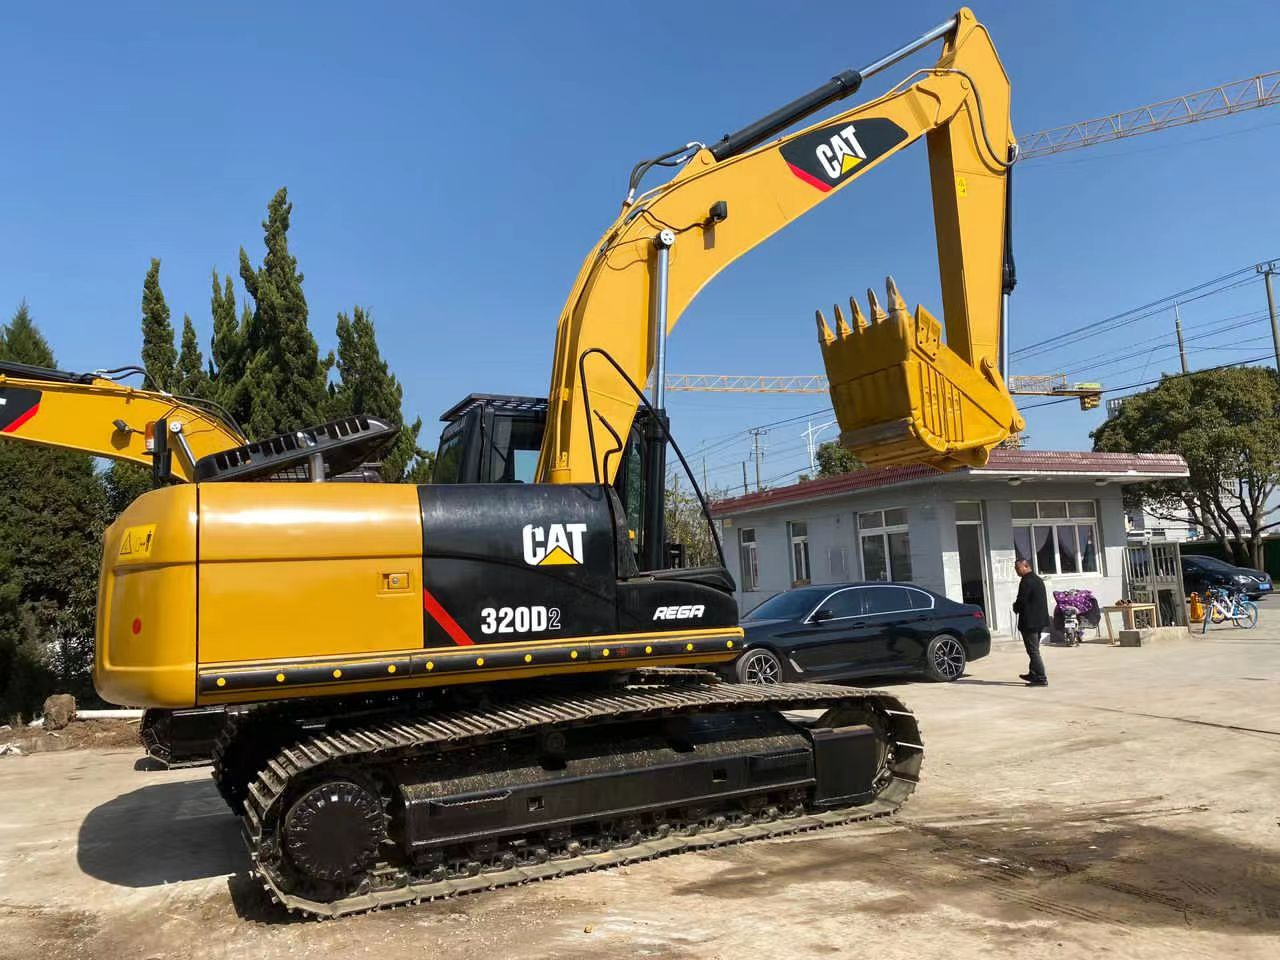 Bager goseničar used excavator CATERPILLAR 320D2 original design and perfect service welcome to inquire: slika 3